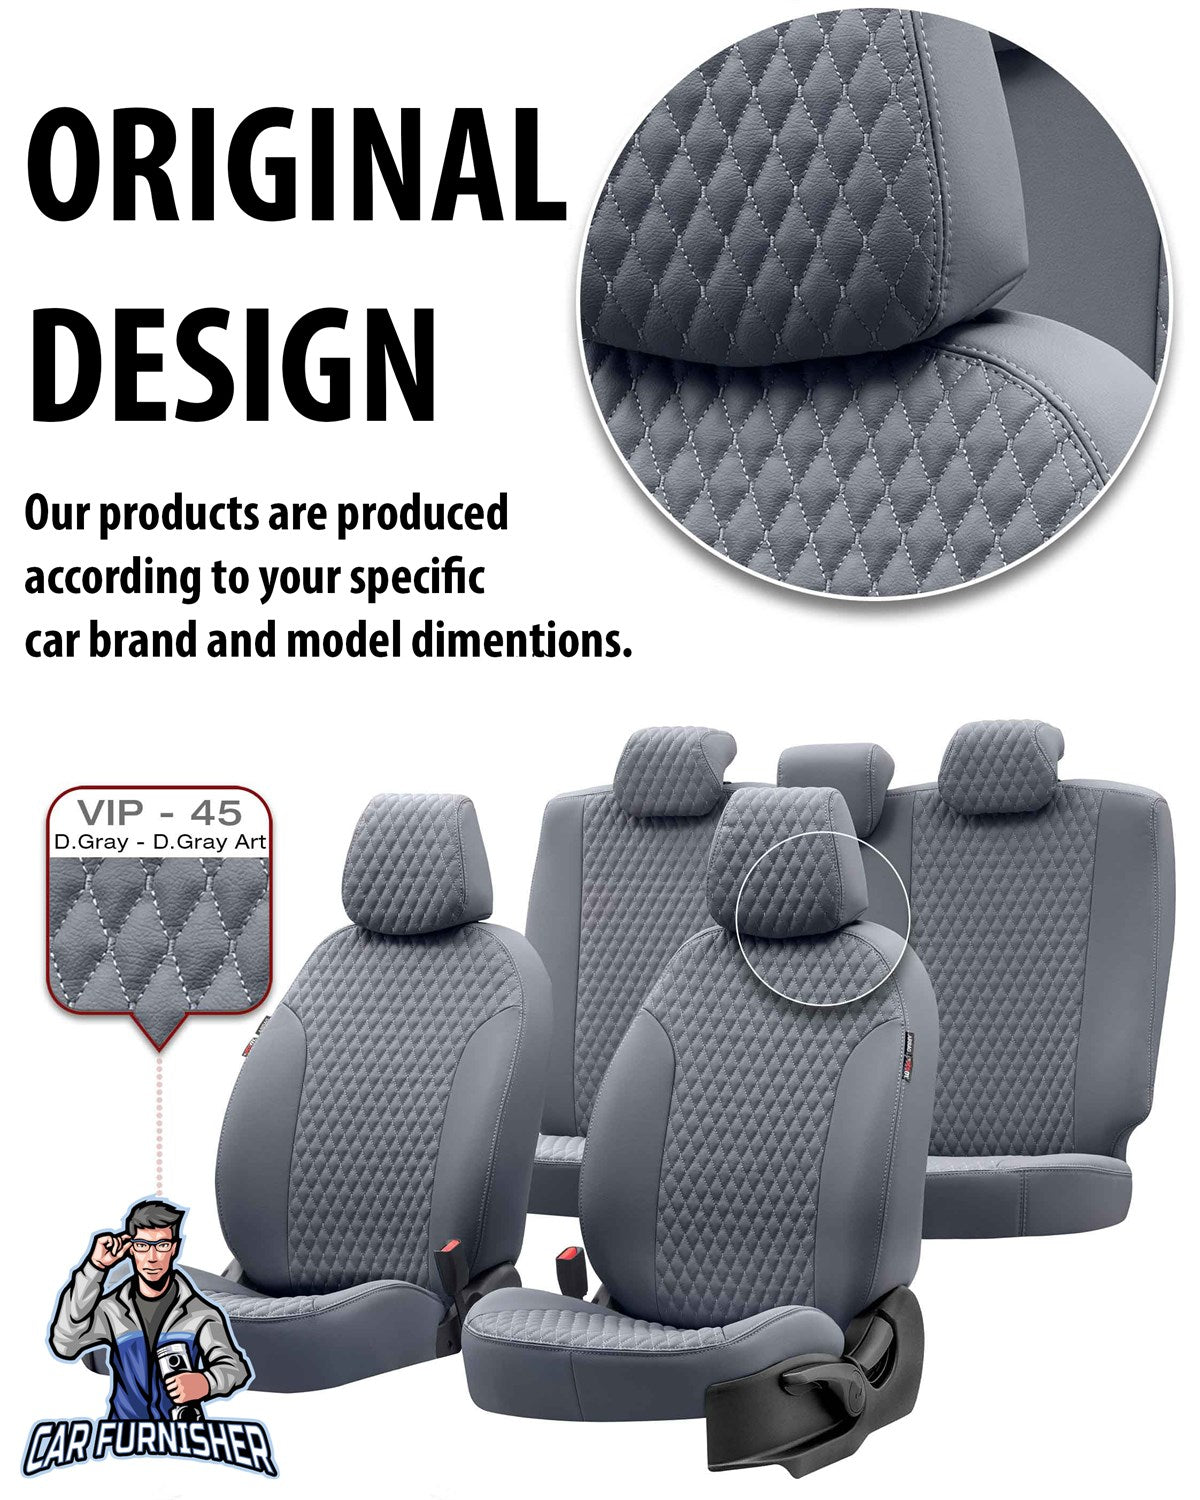 Fiat Brava Seat Covers Amsterdam Leather Design Beige Leather